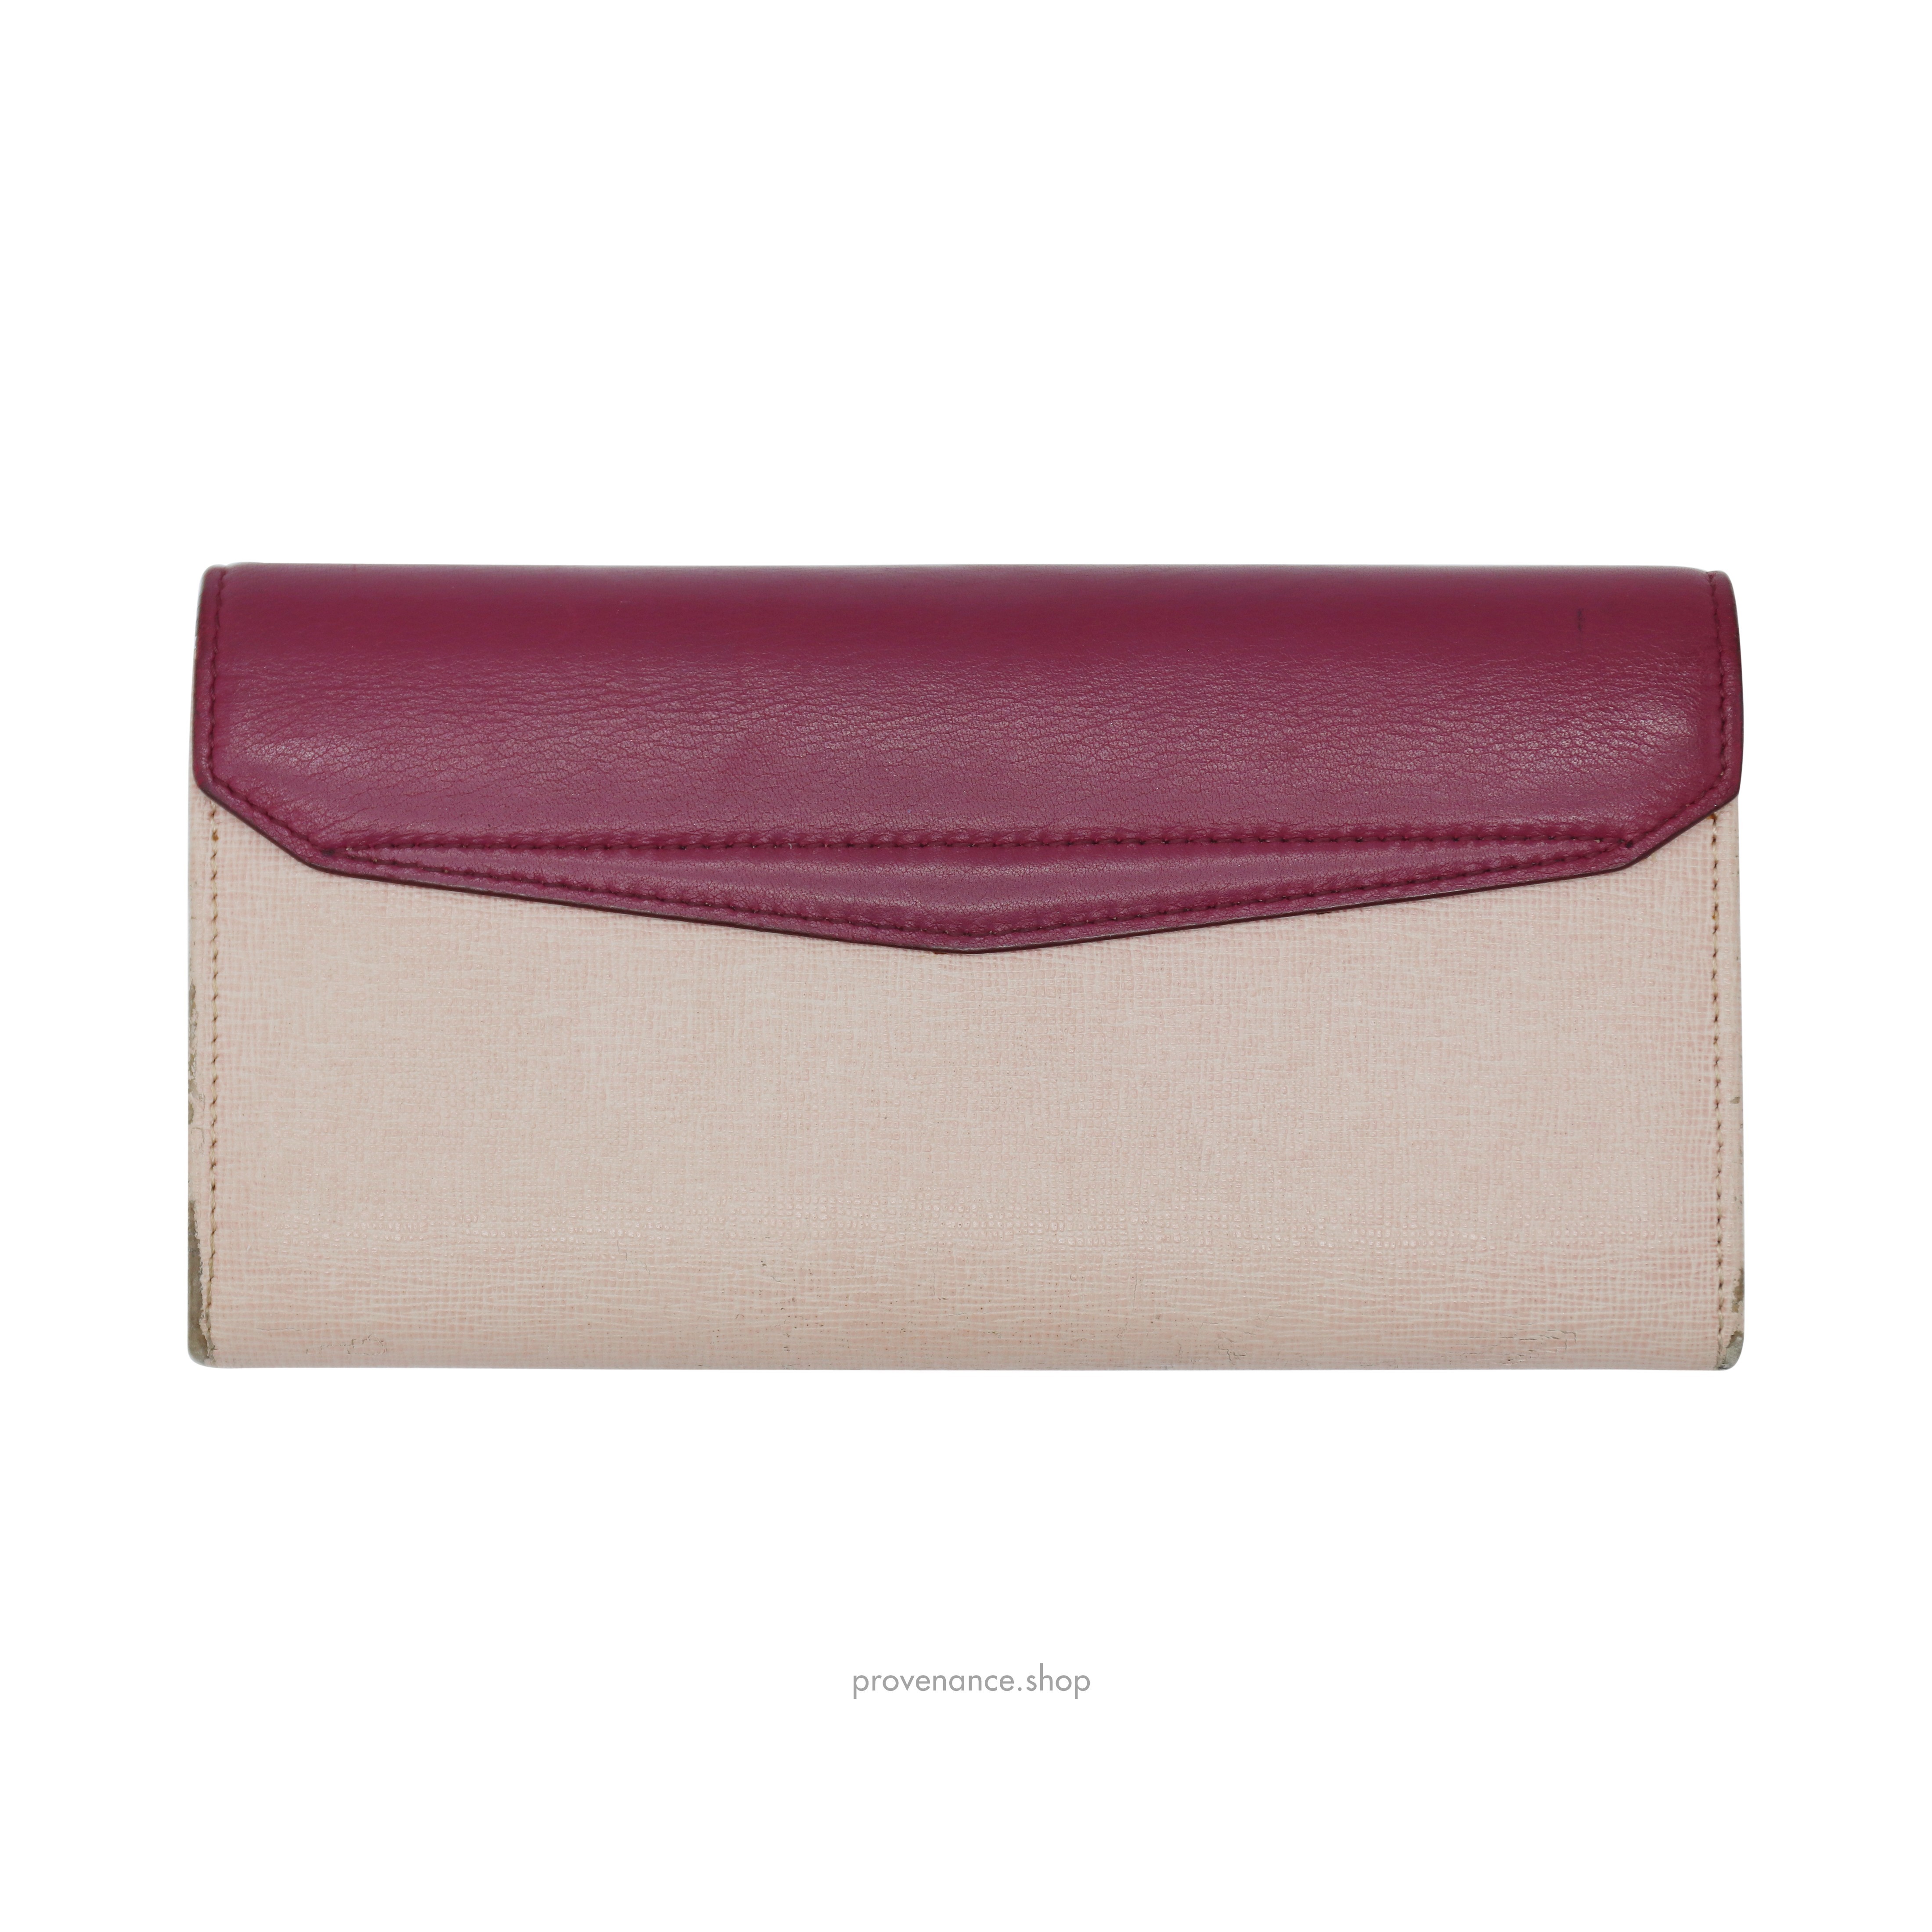 Fendi Long Wallet - Fuchsia Pink Leather - 3